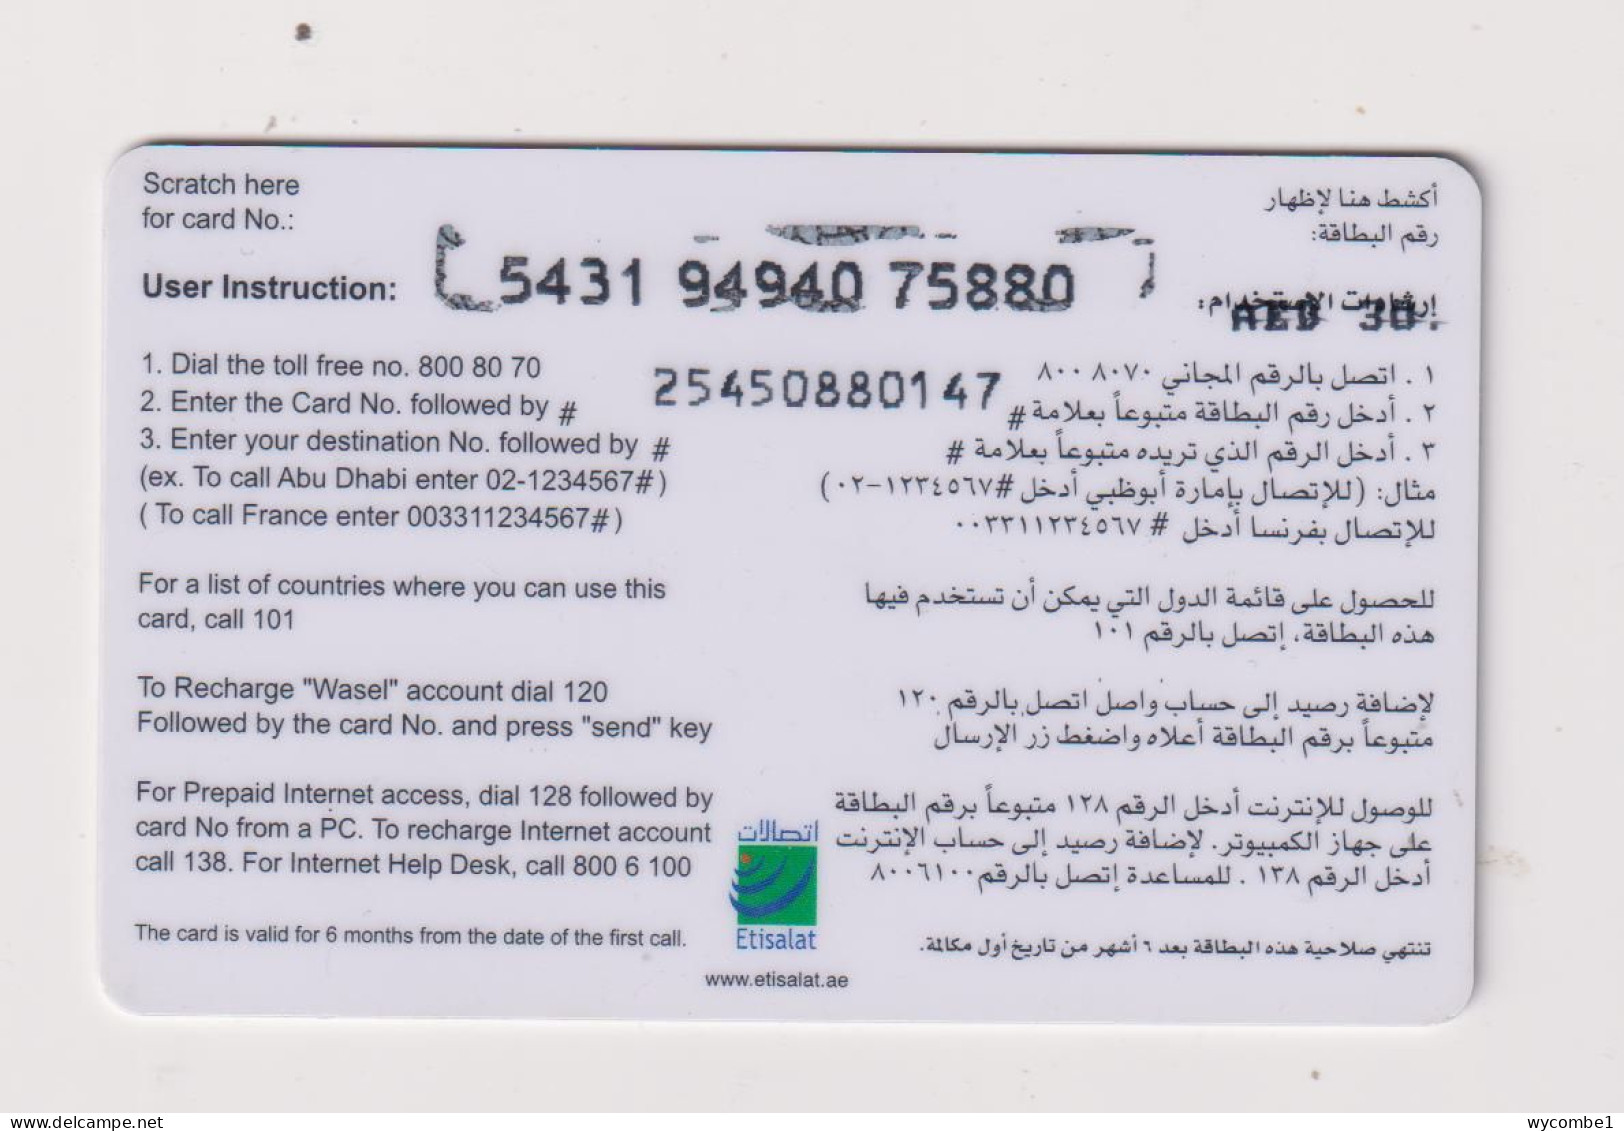 UNITED ARAB EMIRATES - Smiley Face Remote Phonecard - Ver. Arab. Emirate